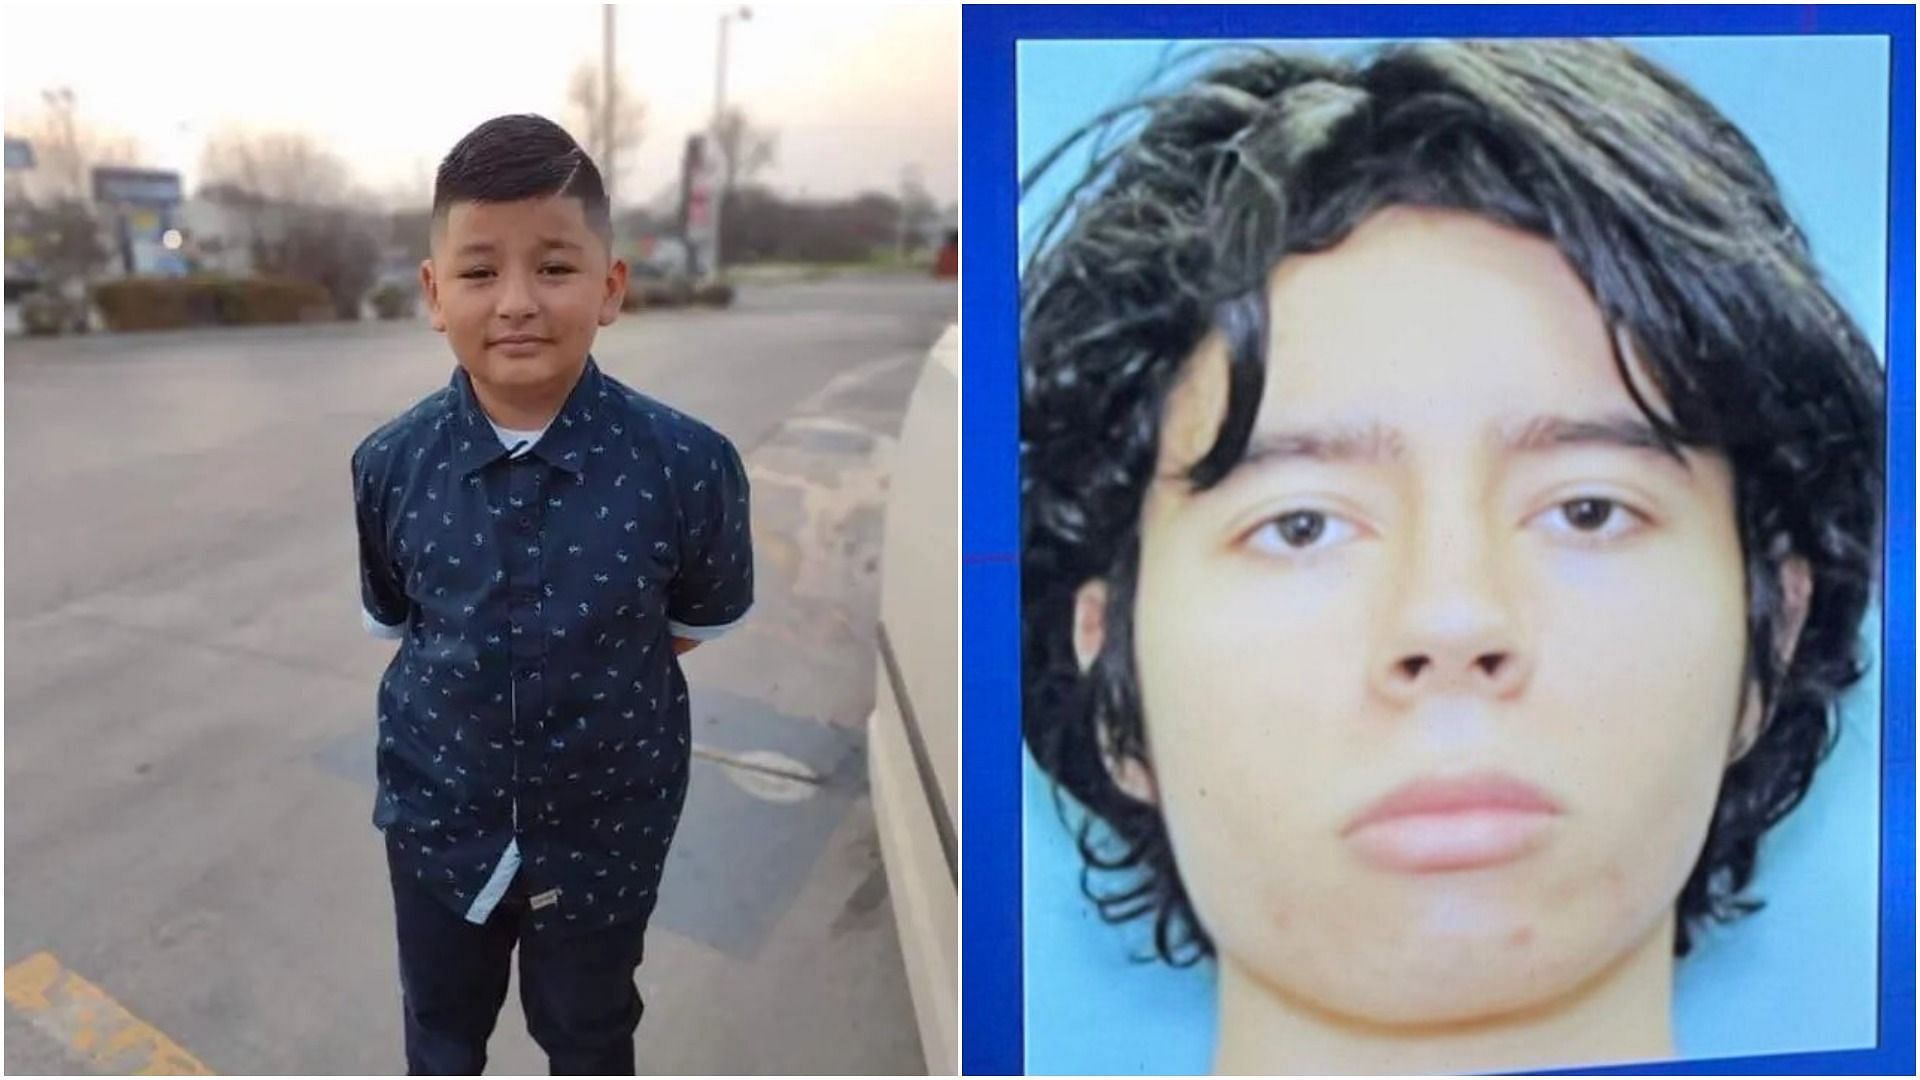 Xavier, Javier, 10, first victim of the Texas Mass Shooting, and the gunman, Salvador Ramos, 18 (Image via Twitter)